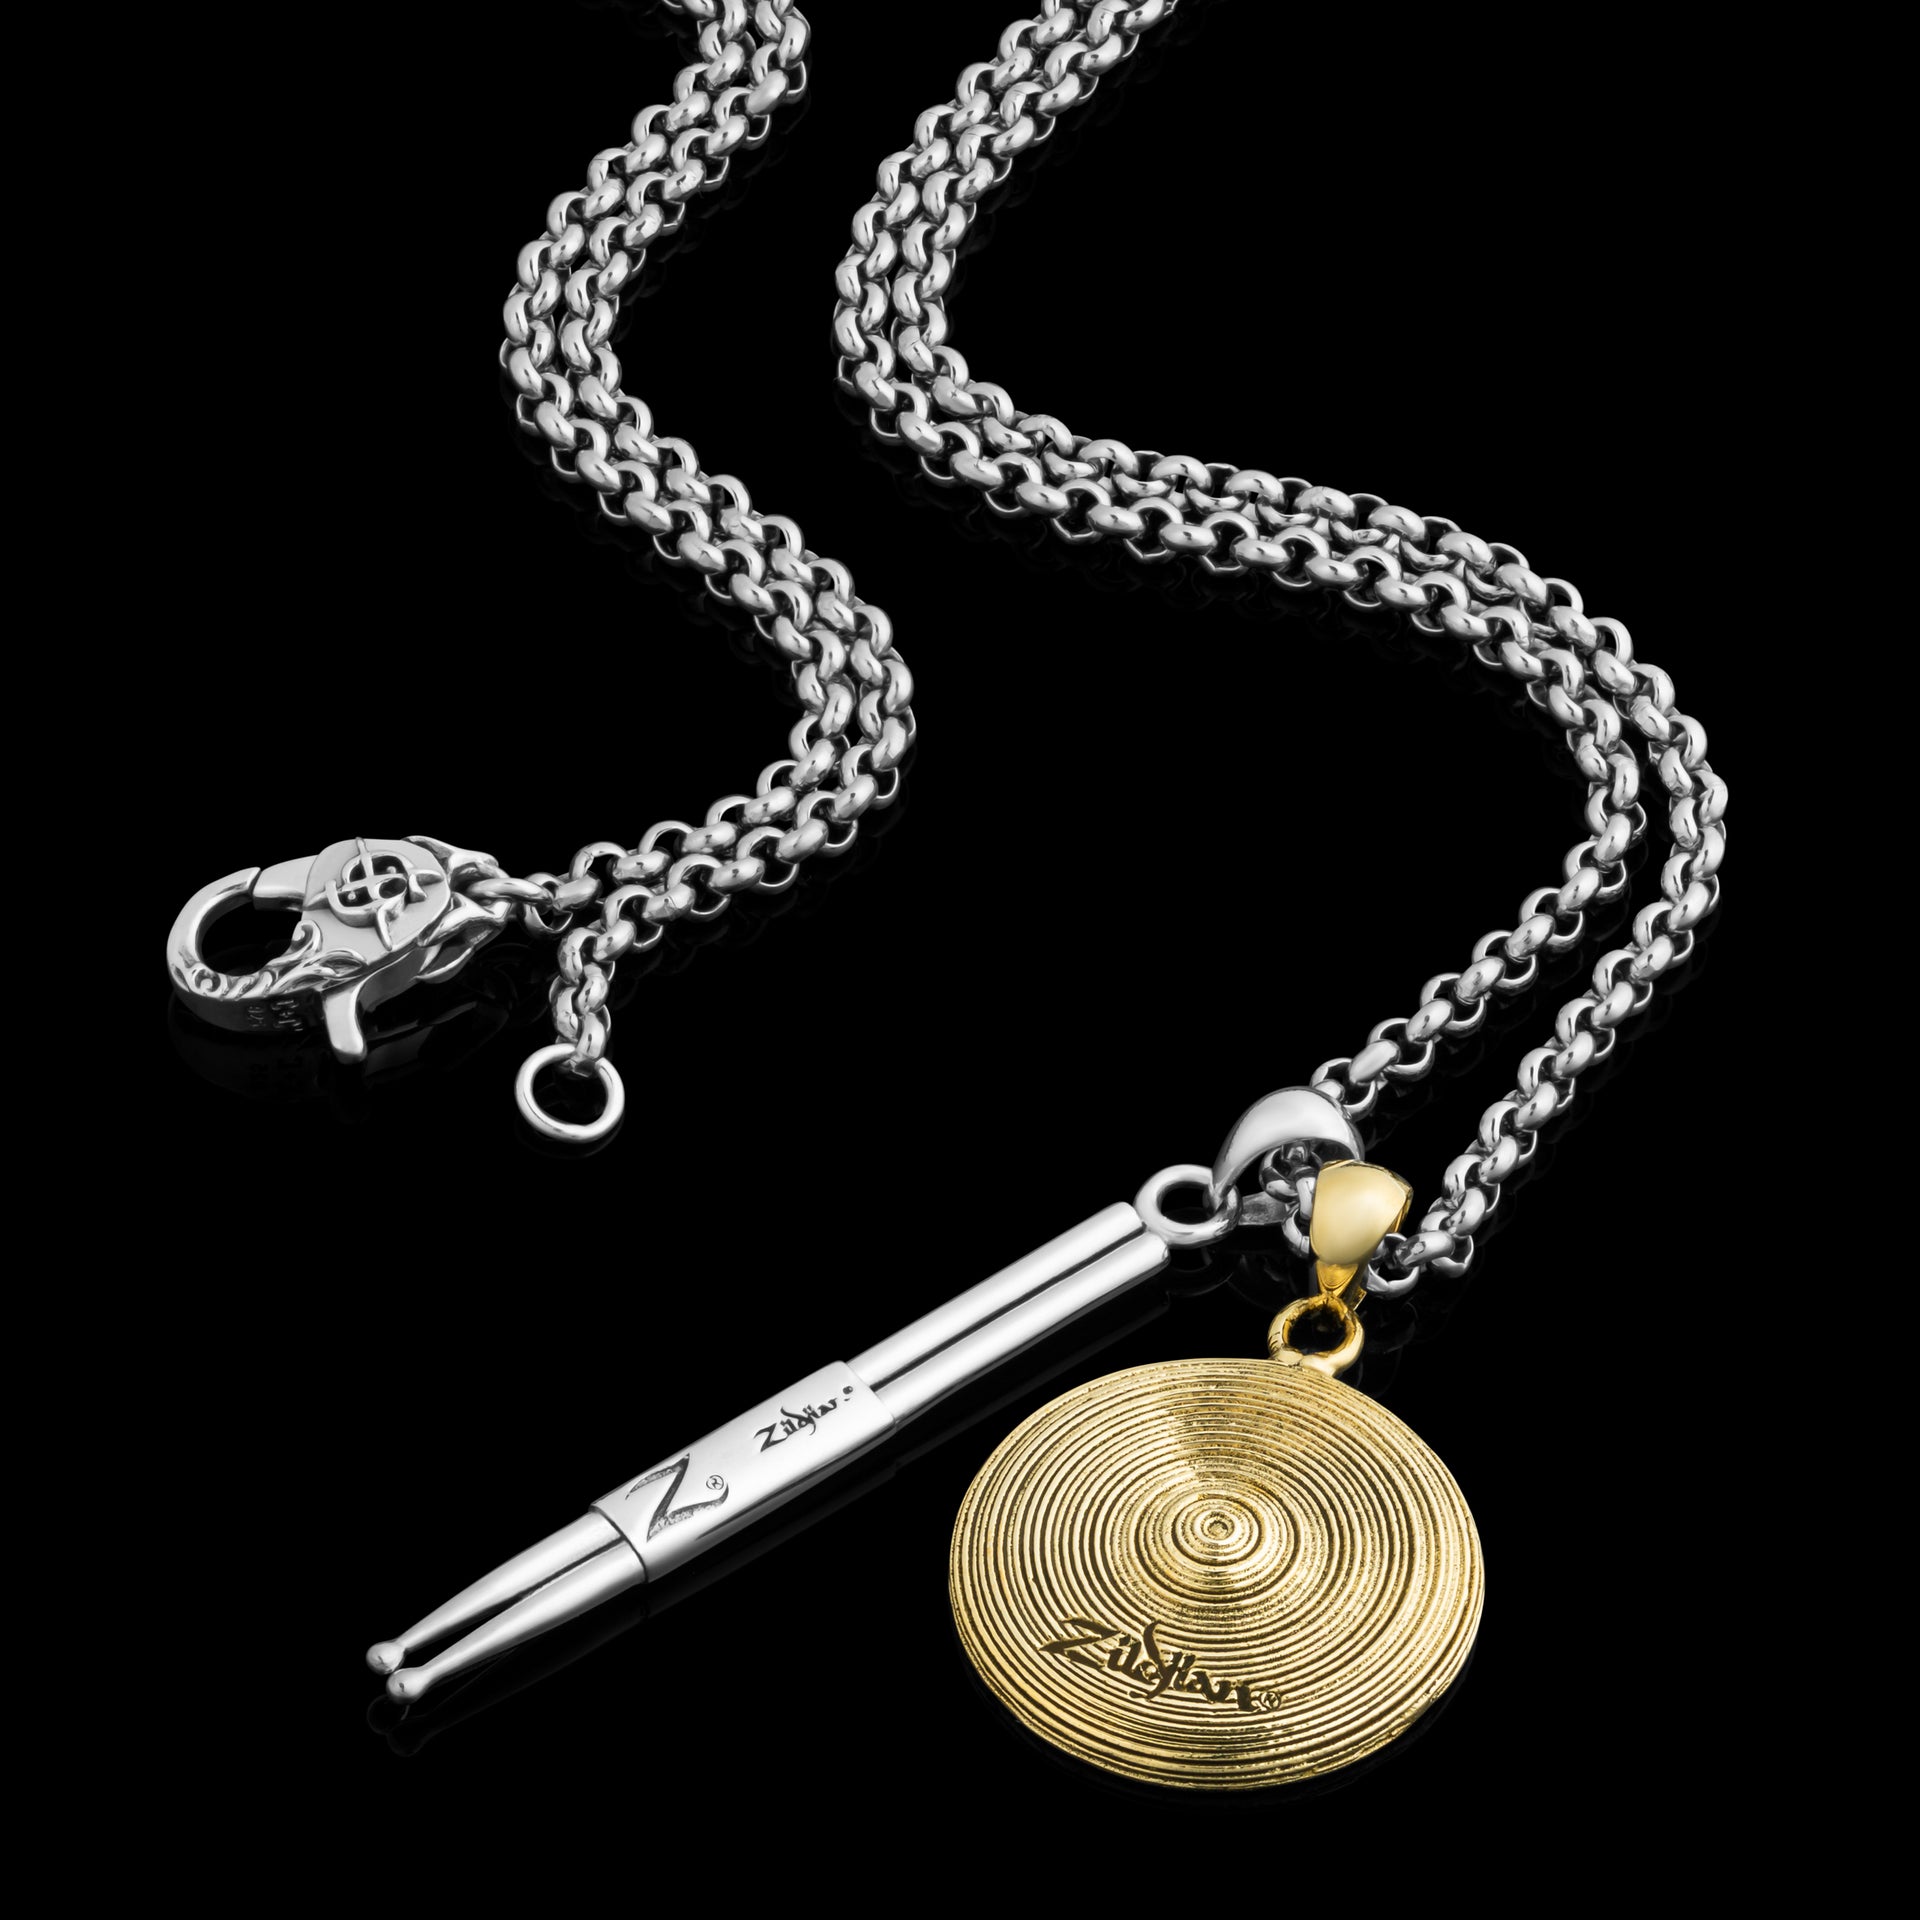 Key x Zildjian Handcrafted Sterling Silver Men's Pendant with